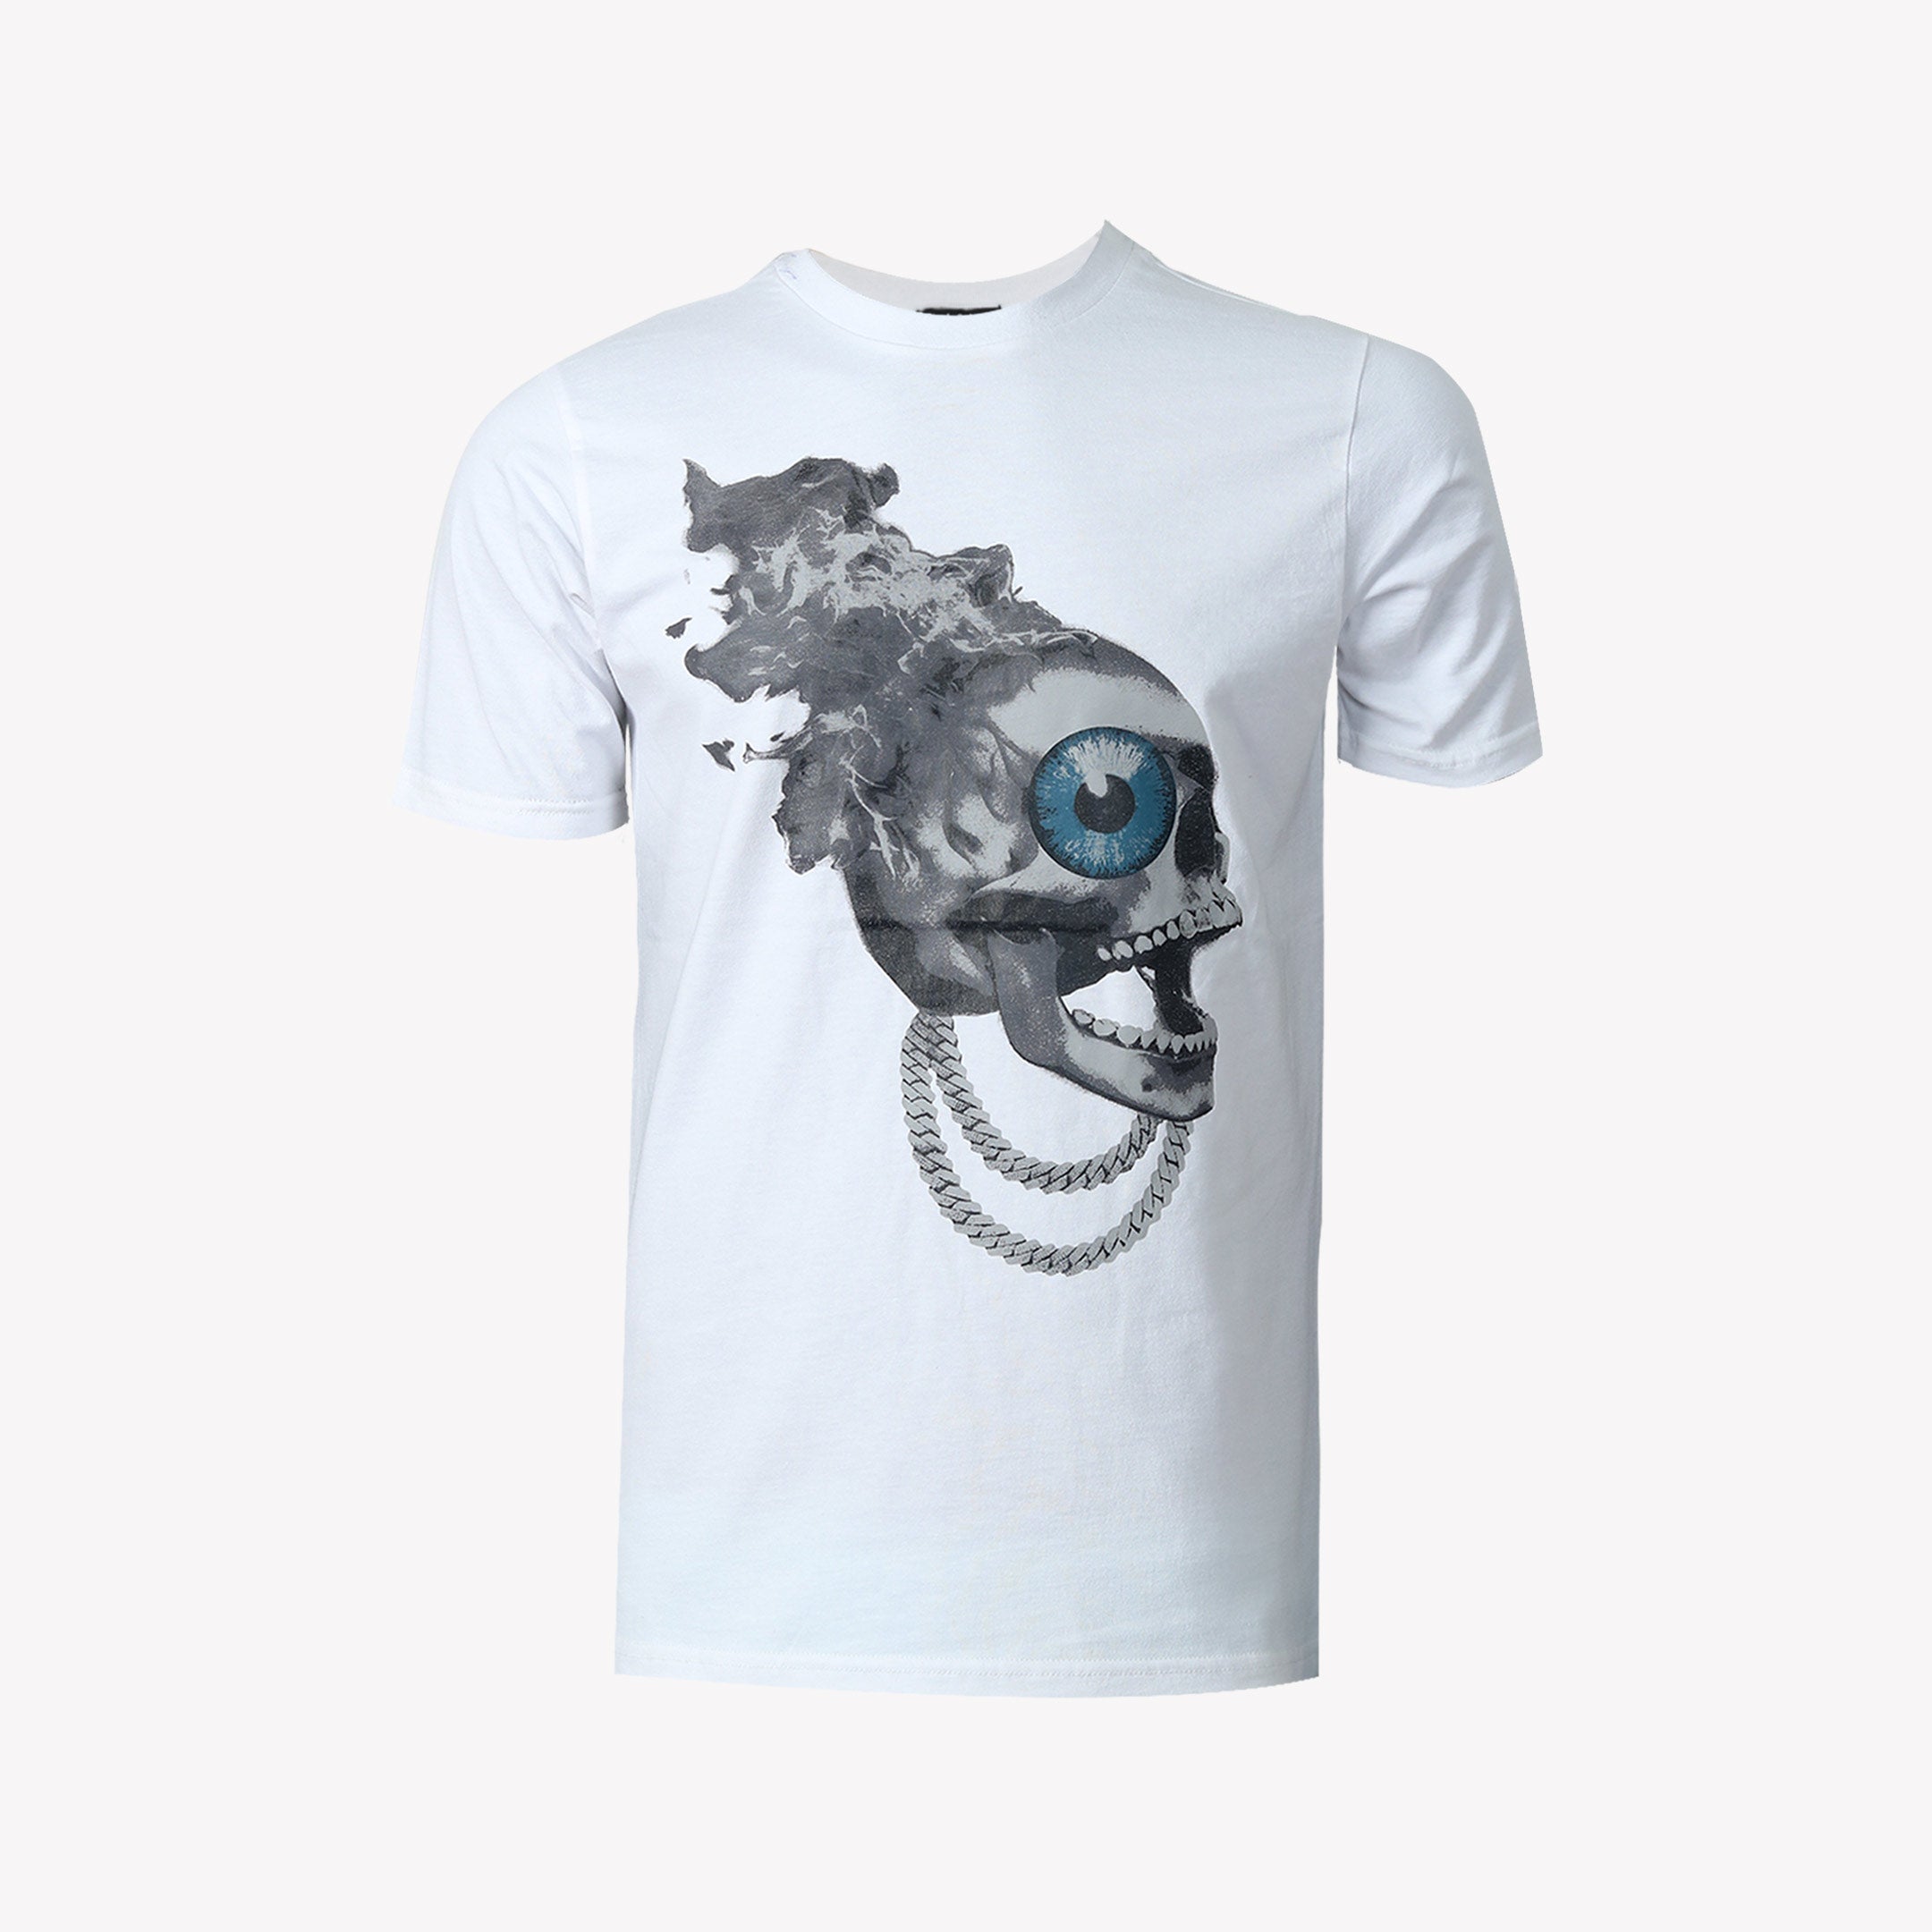 Boohoo Man T-Shirt Skull Bone